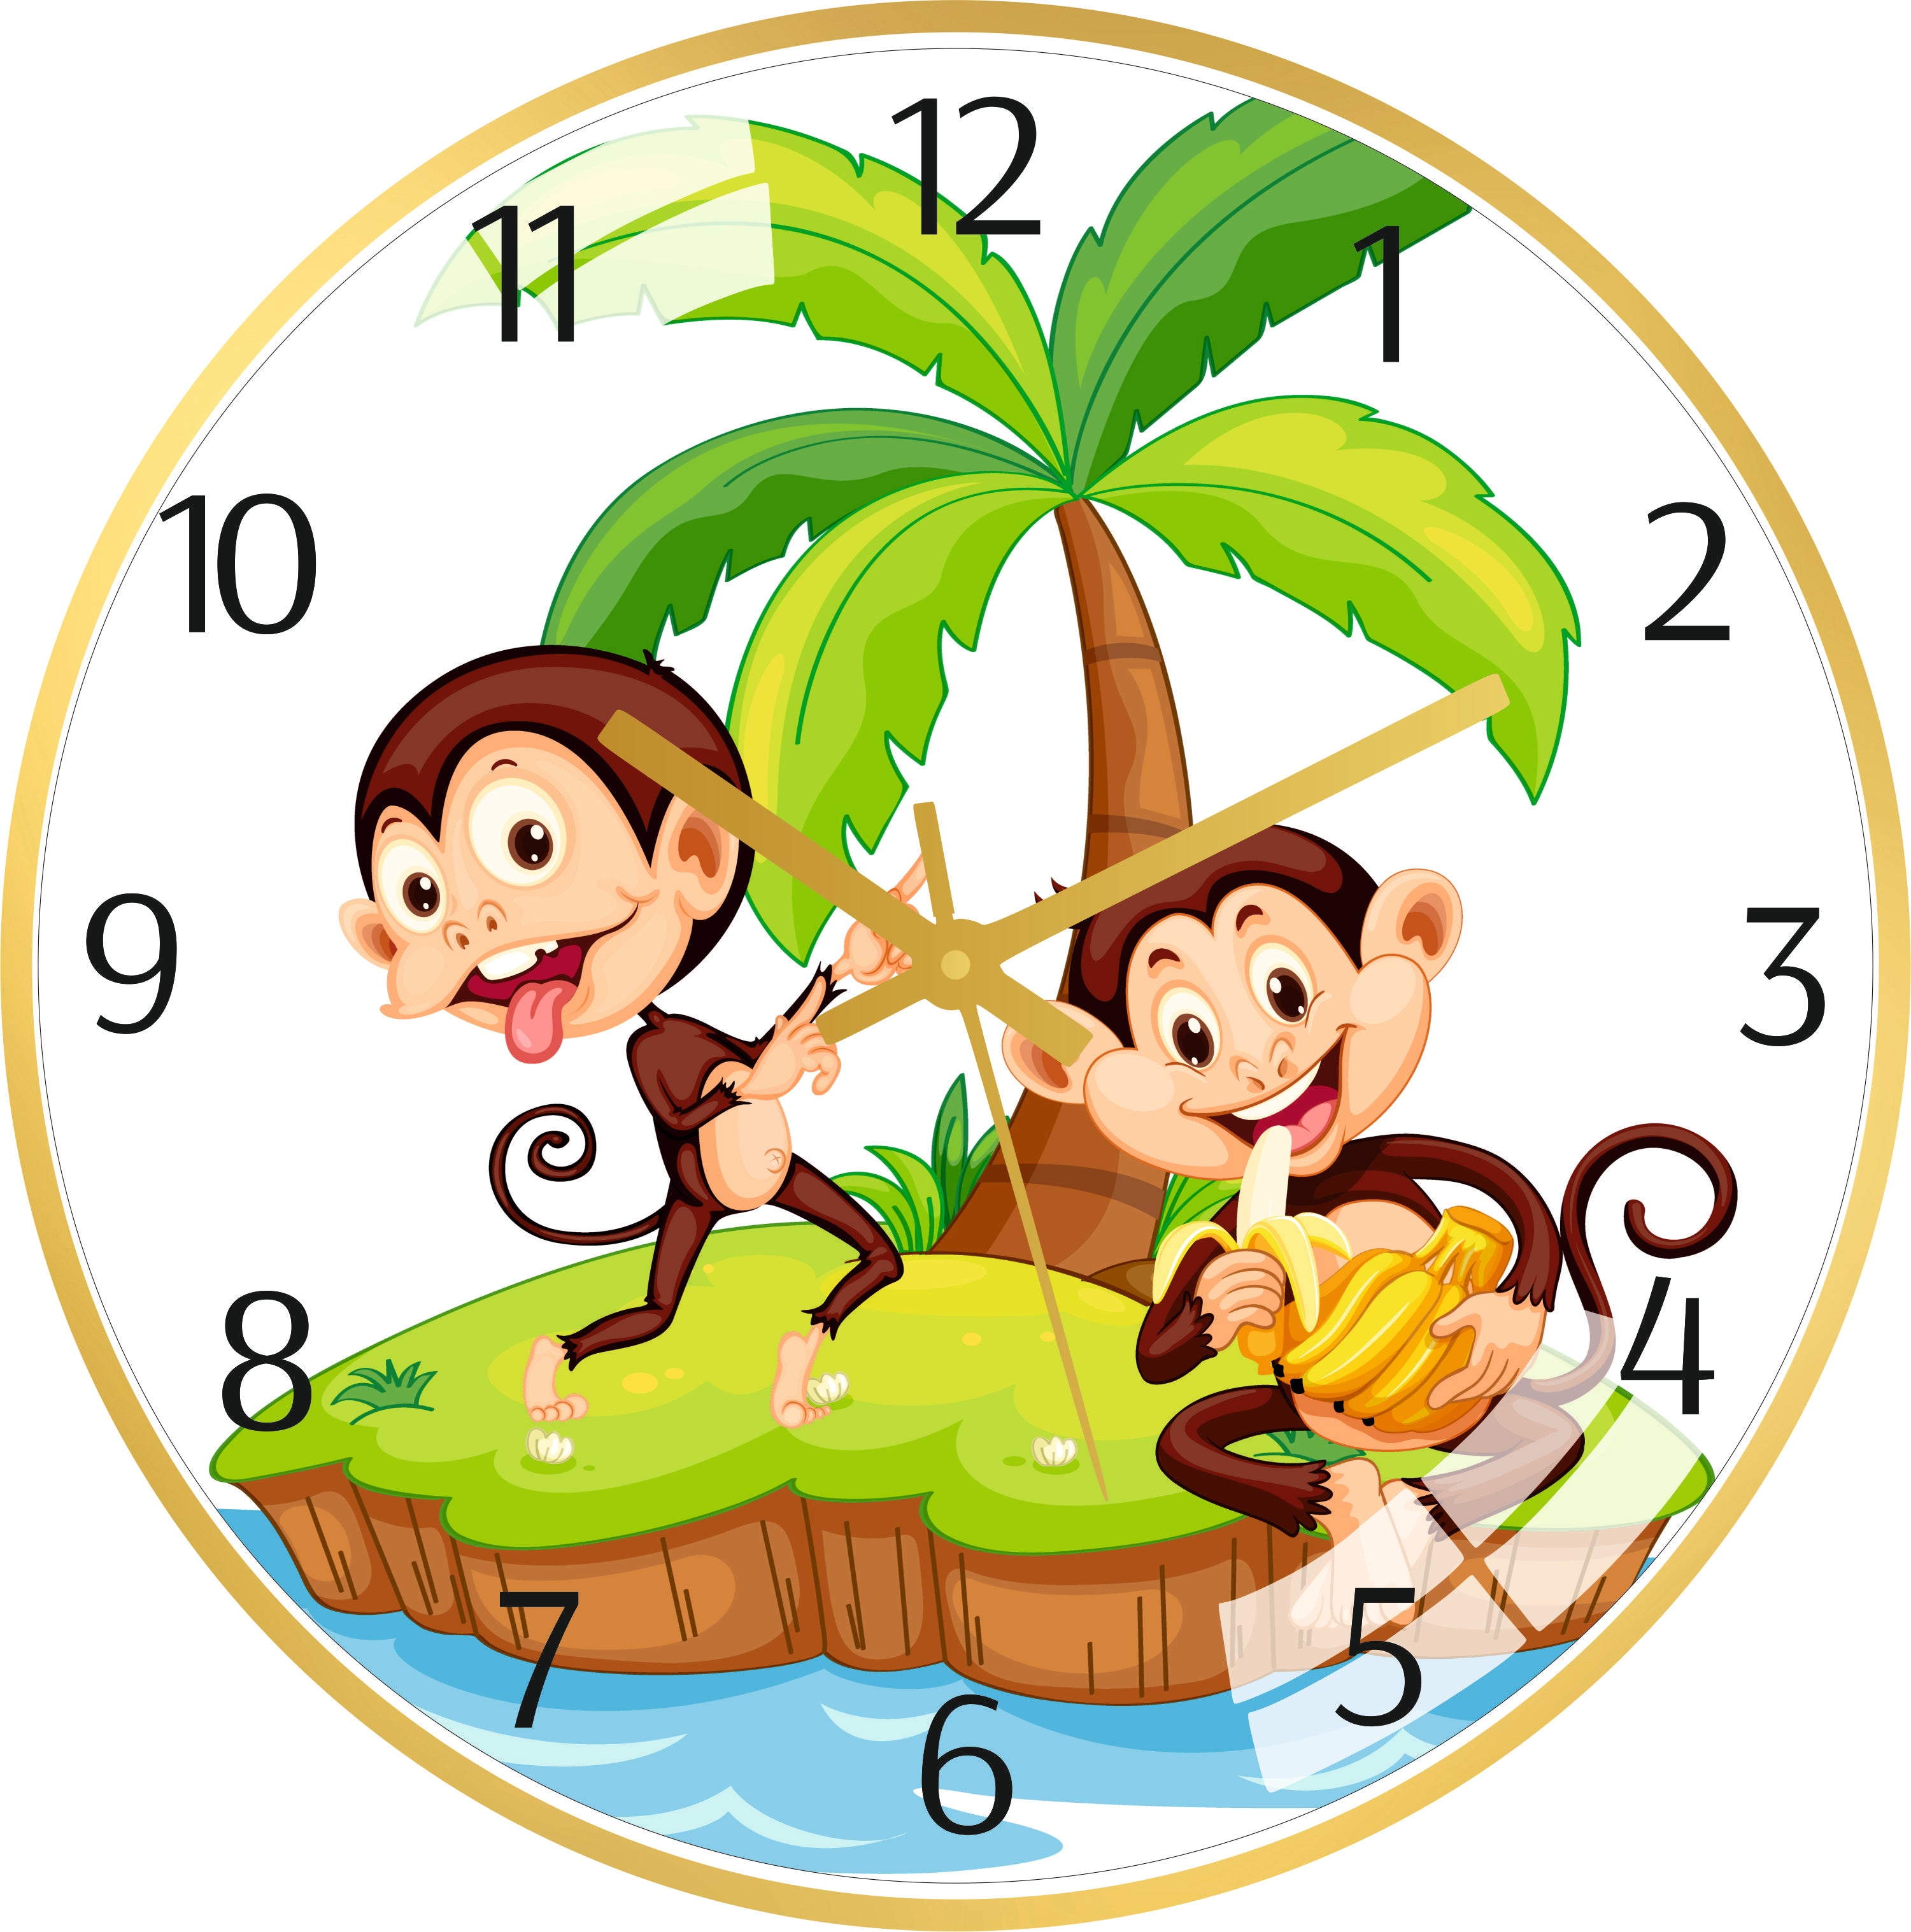 Cartoon Monkey Wall Clock